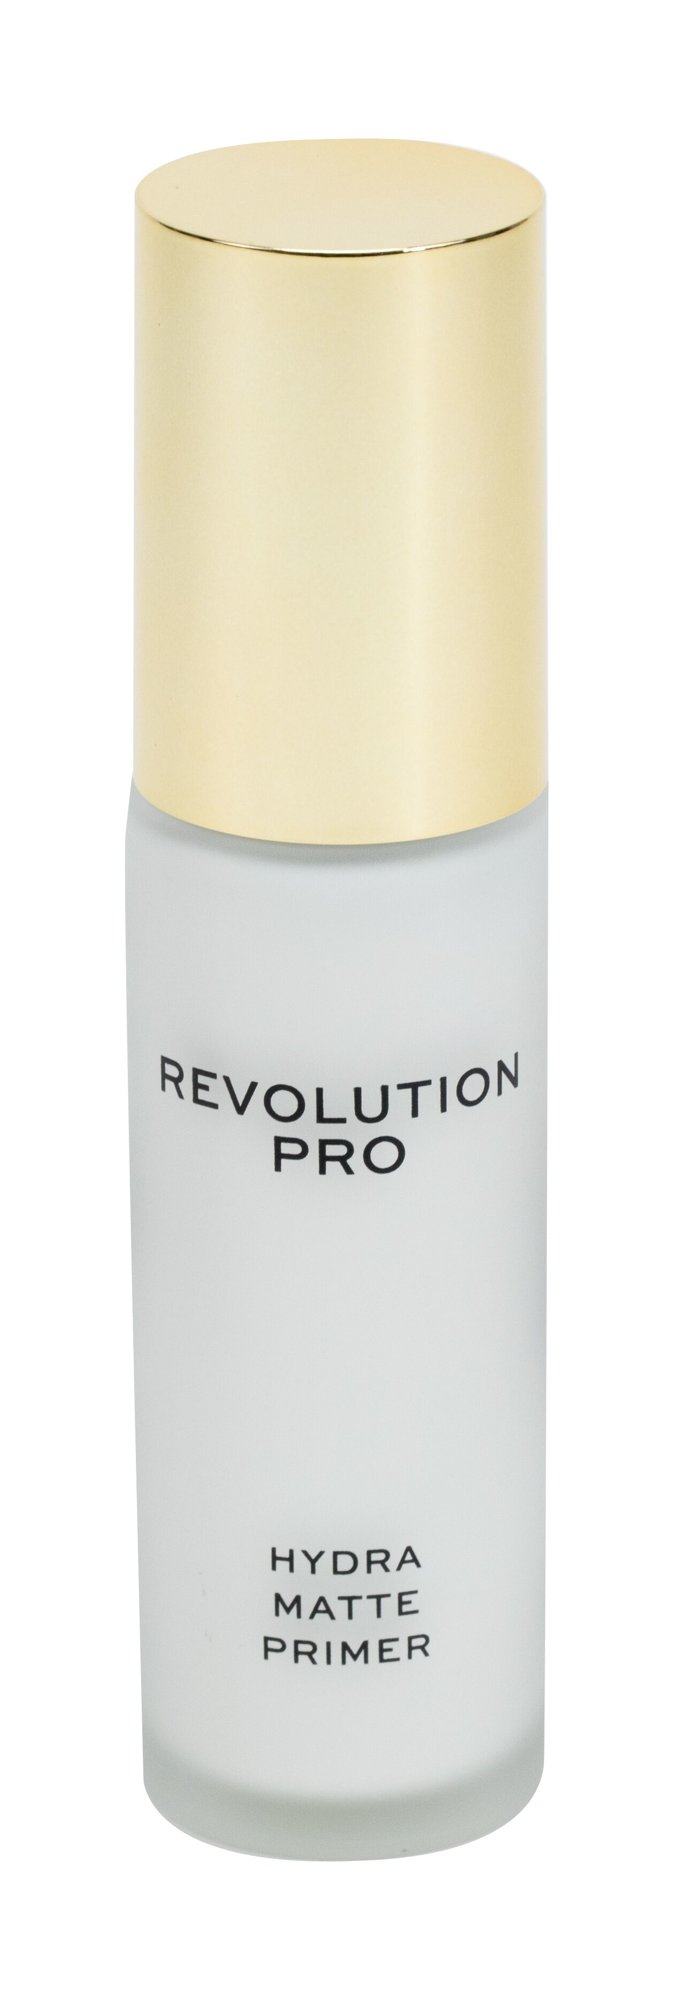 Makeup Revolution London Revolution PRO Hydra Matte Primer 30ml primeris (Pažeista pakuotė)